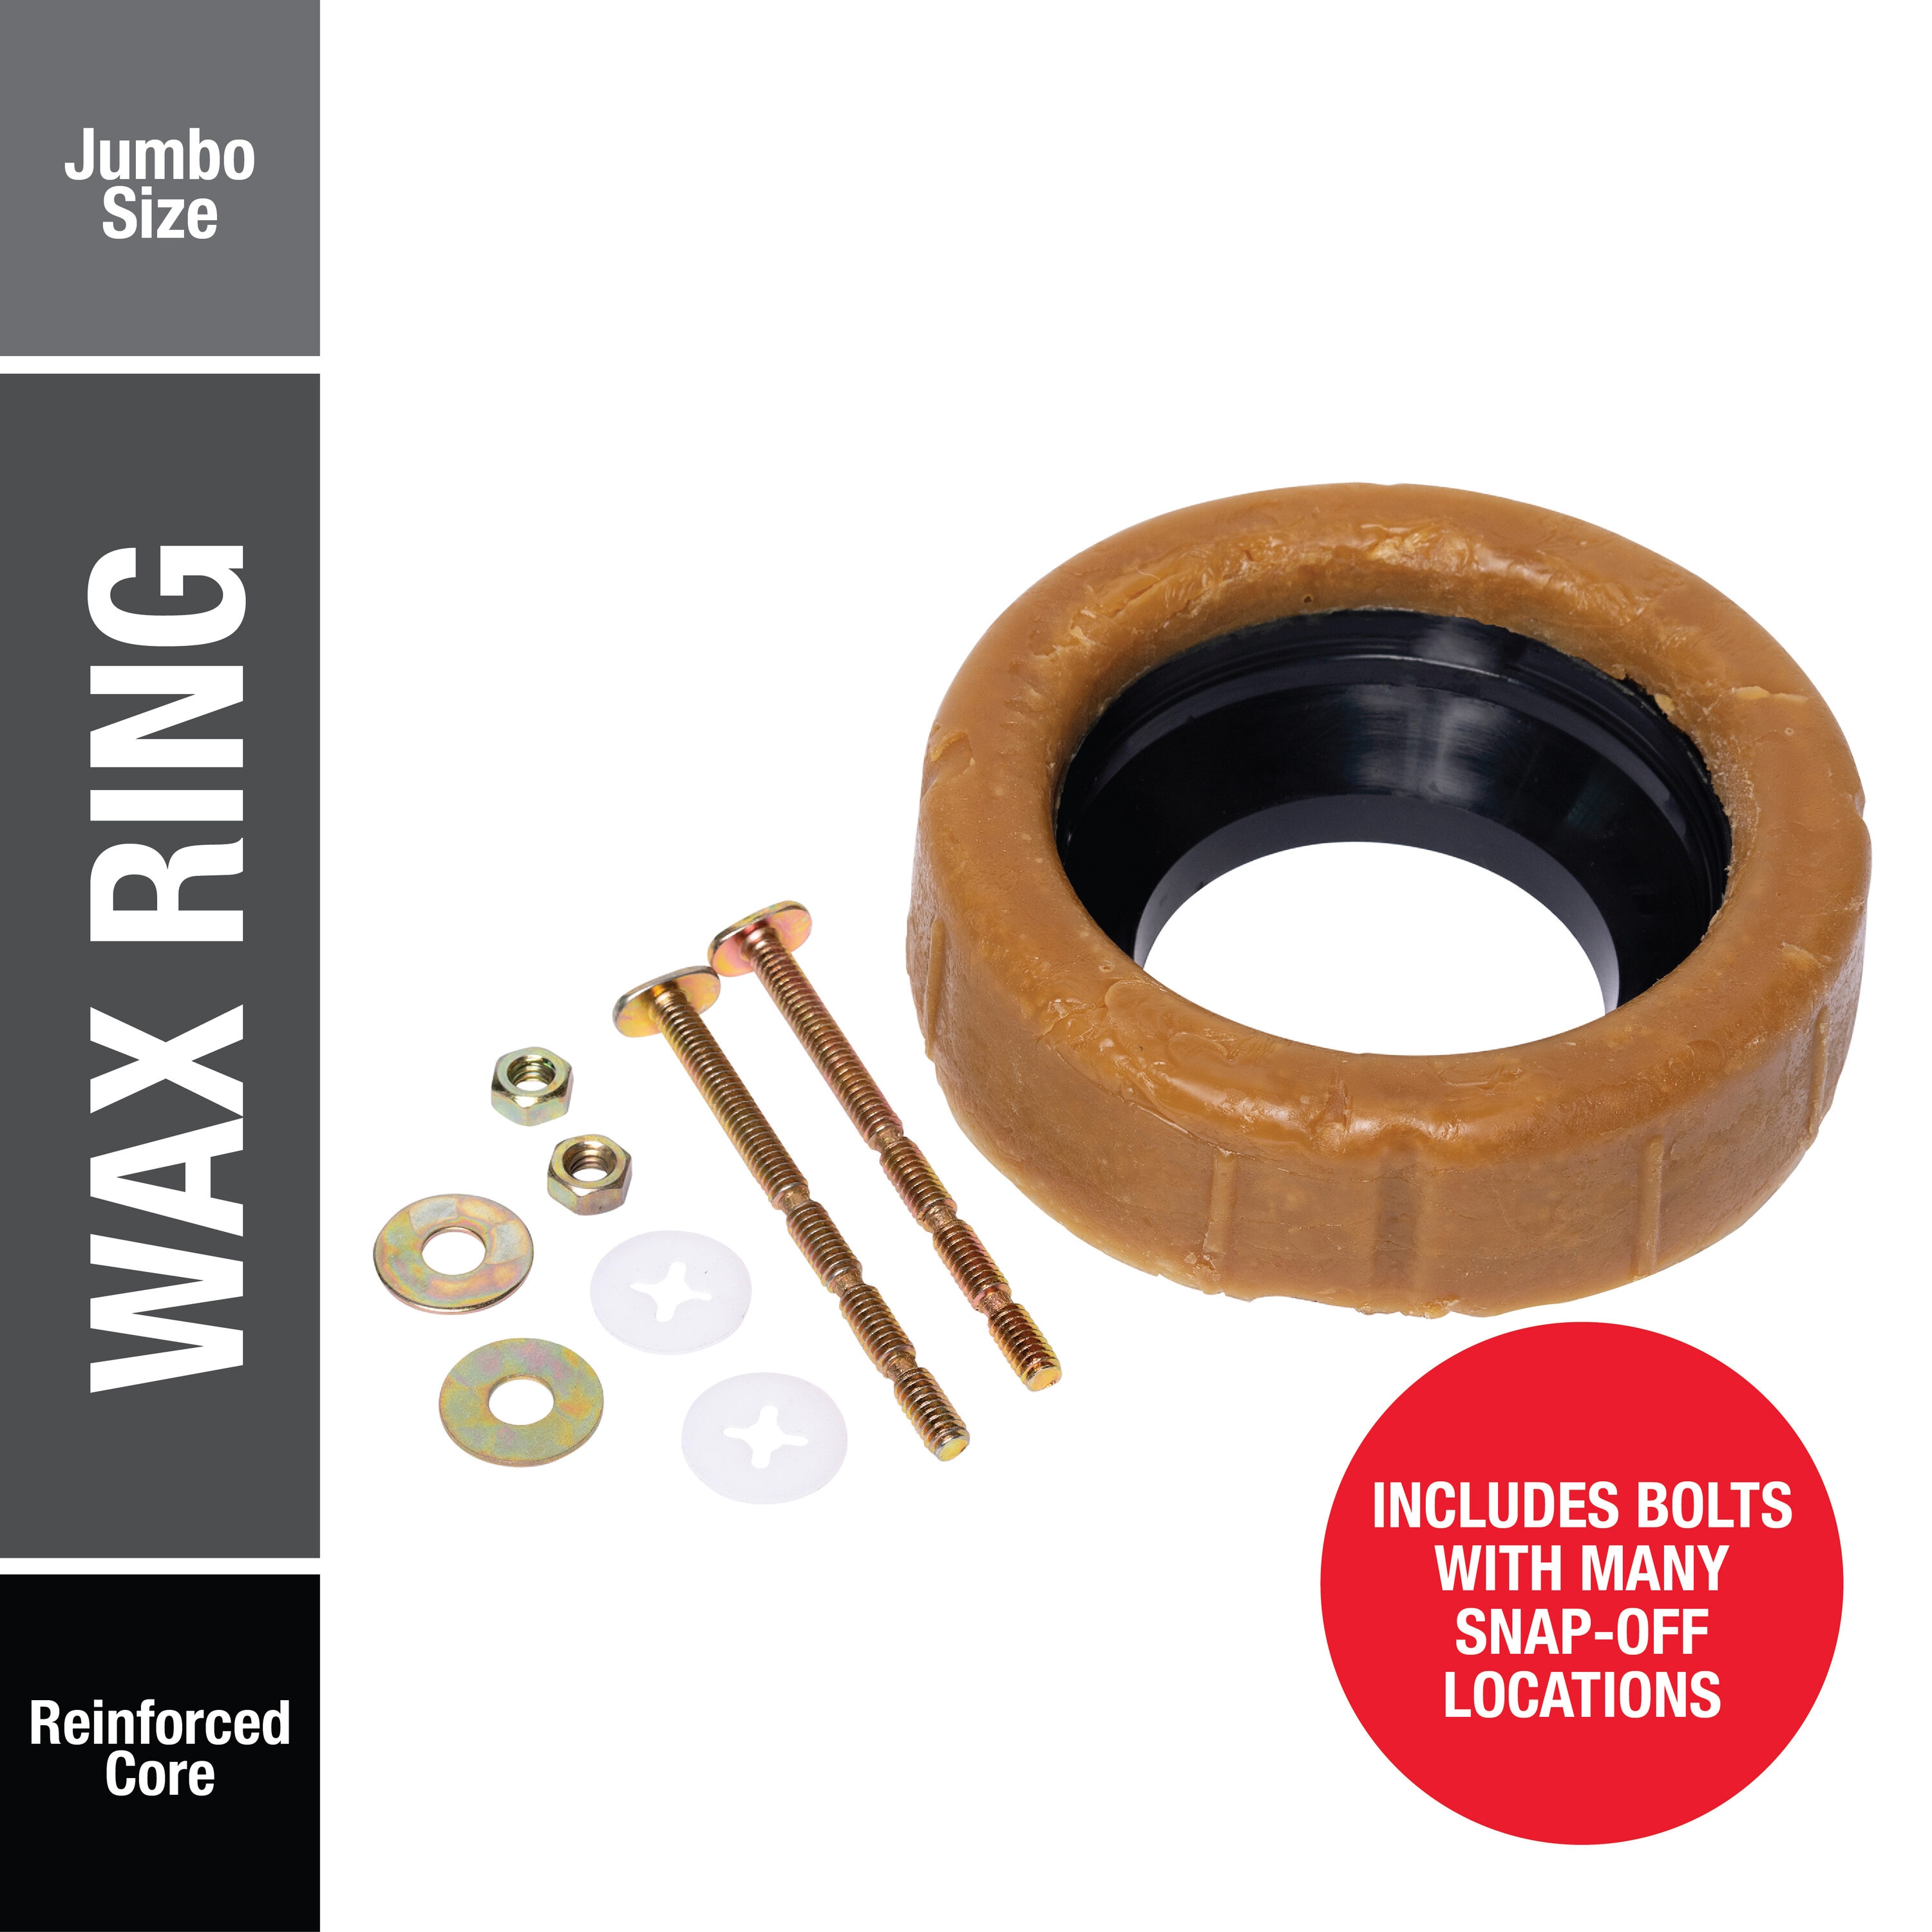 Petroleum Wax Toilet Bowl Ring | Signature Hardware 346346